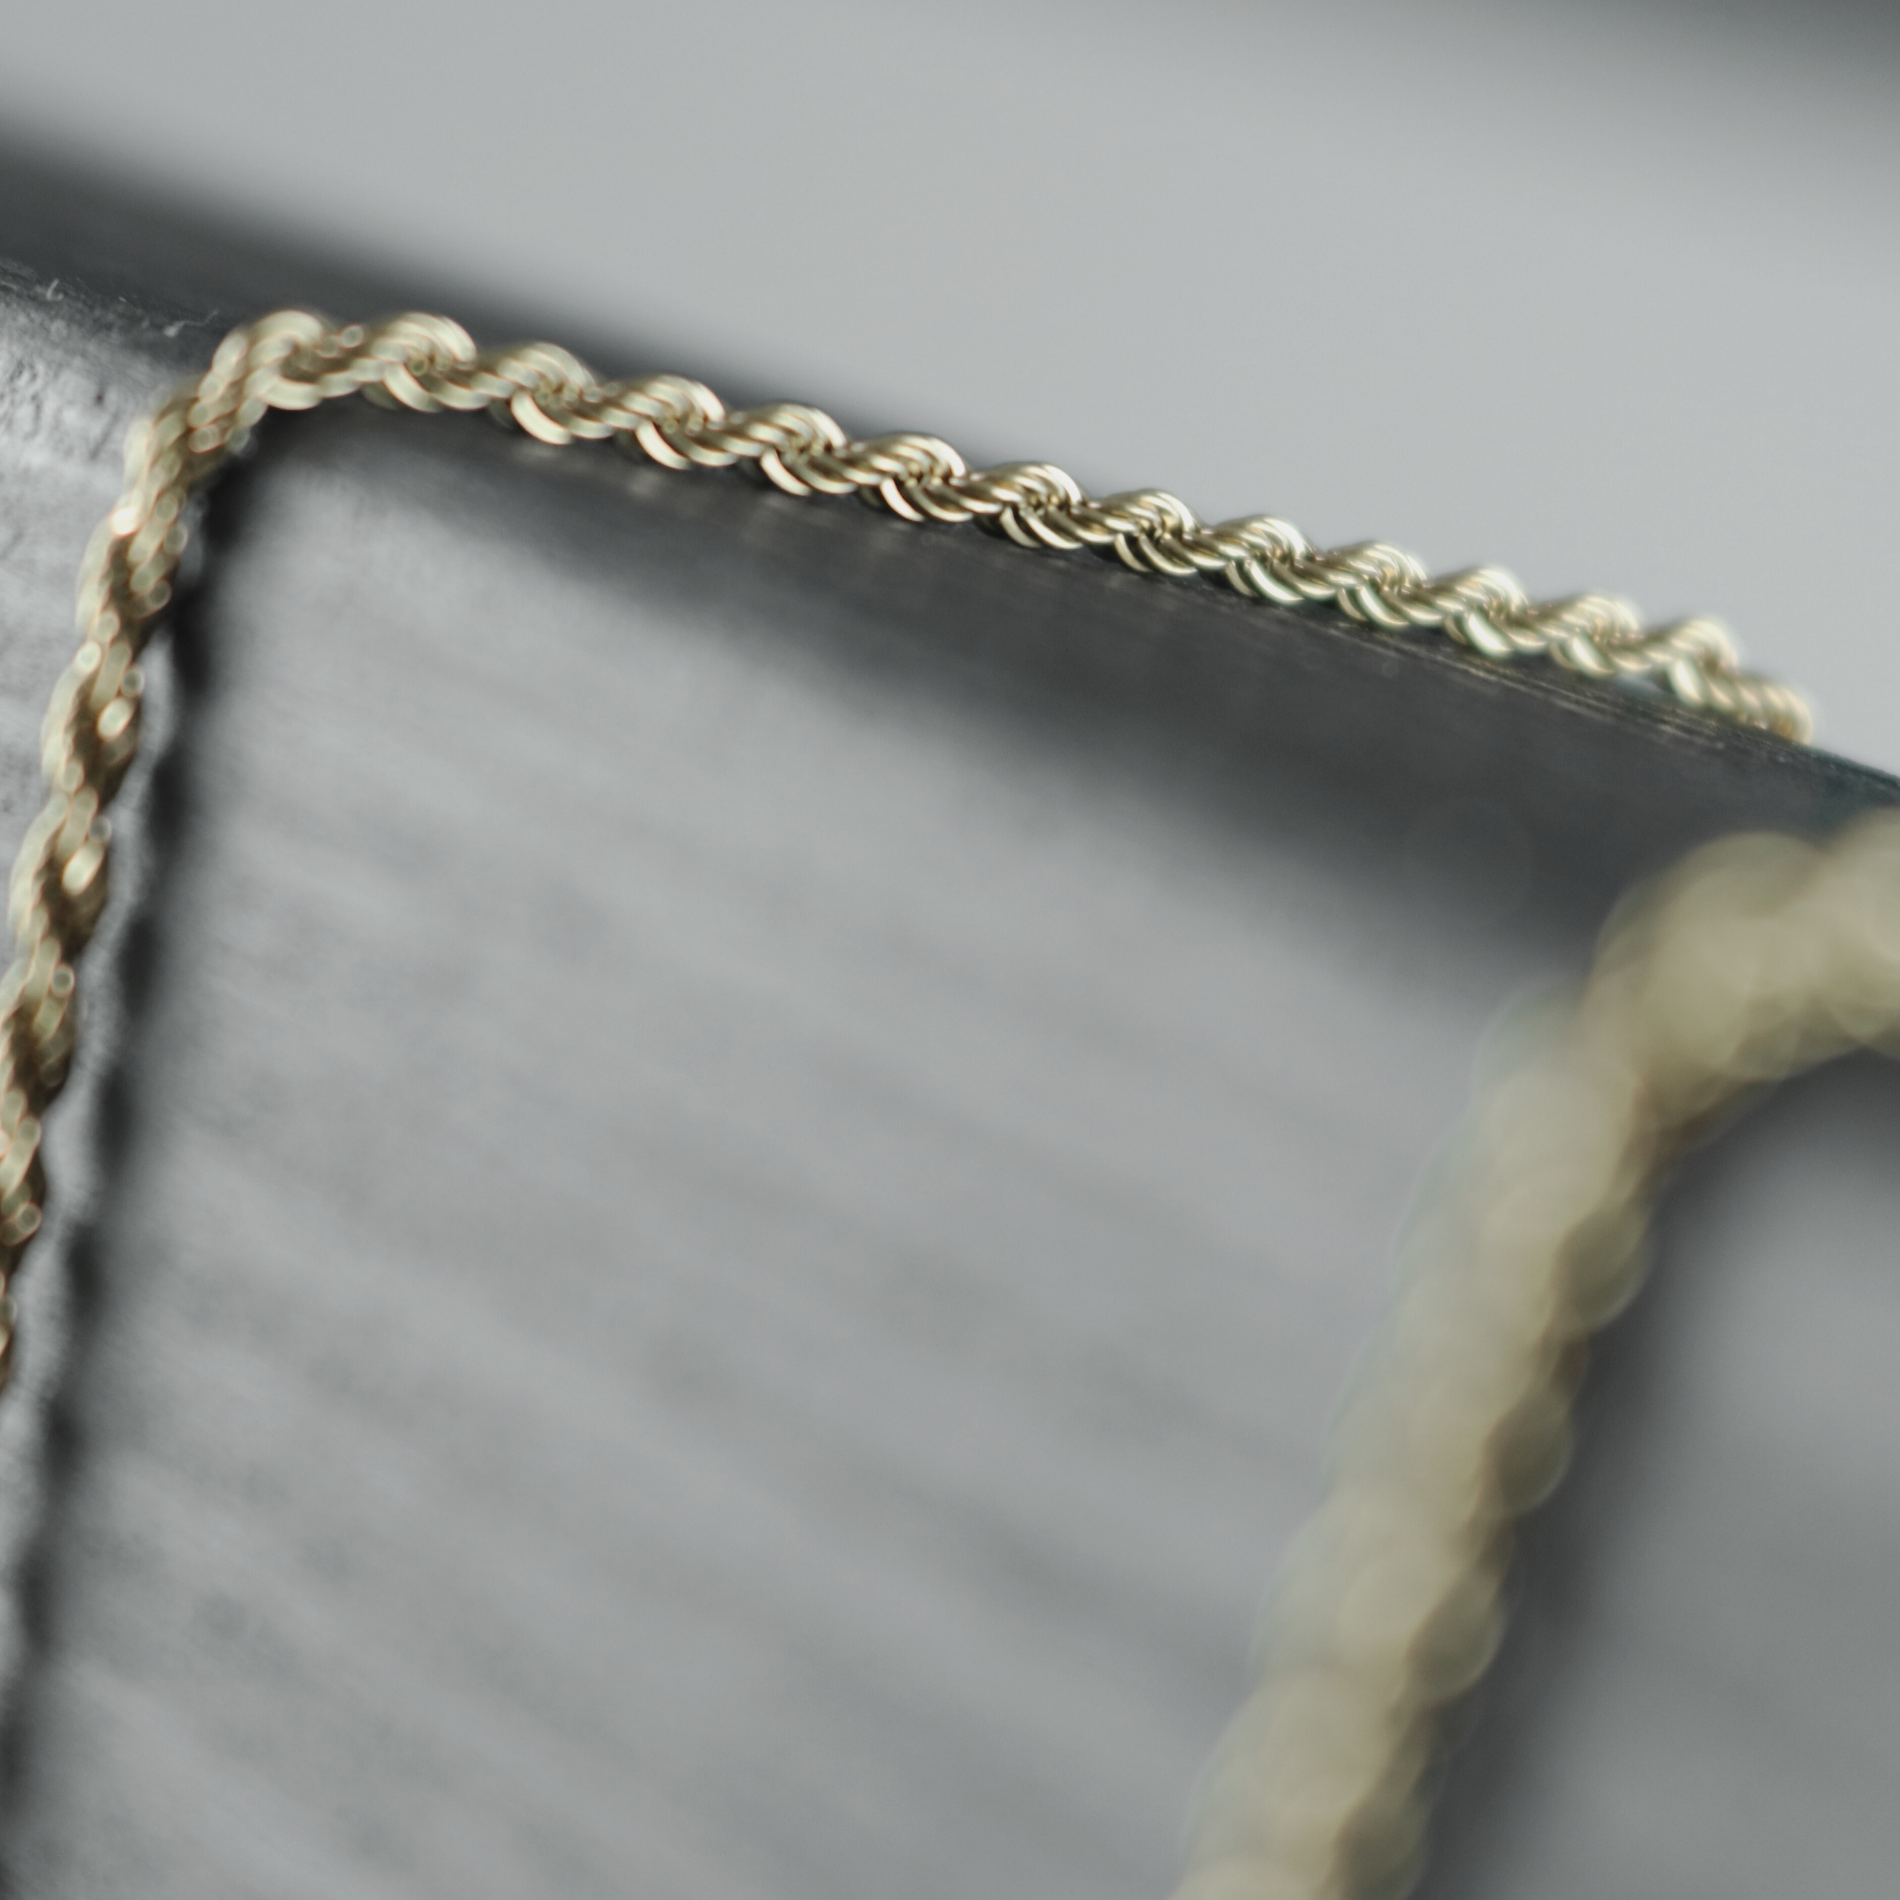 Passion Waterproof 2mm Rope Necklace 70cm 18K Gold Plating I Dansk Copenhagen